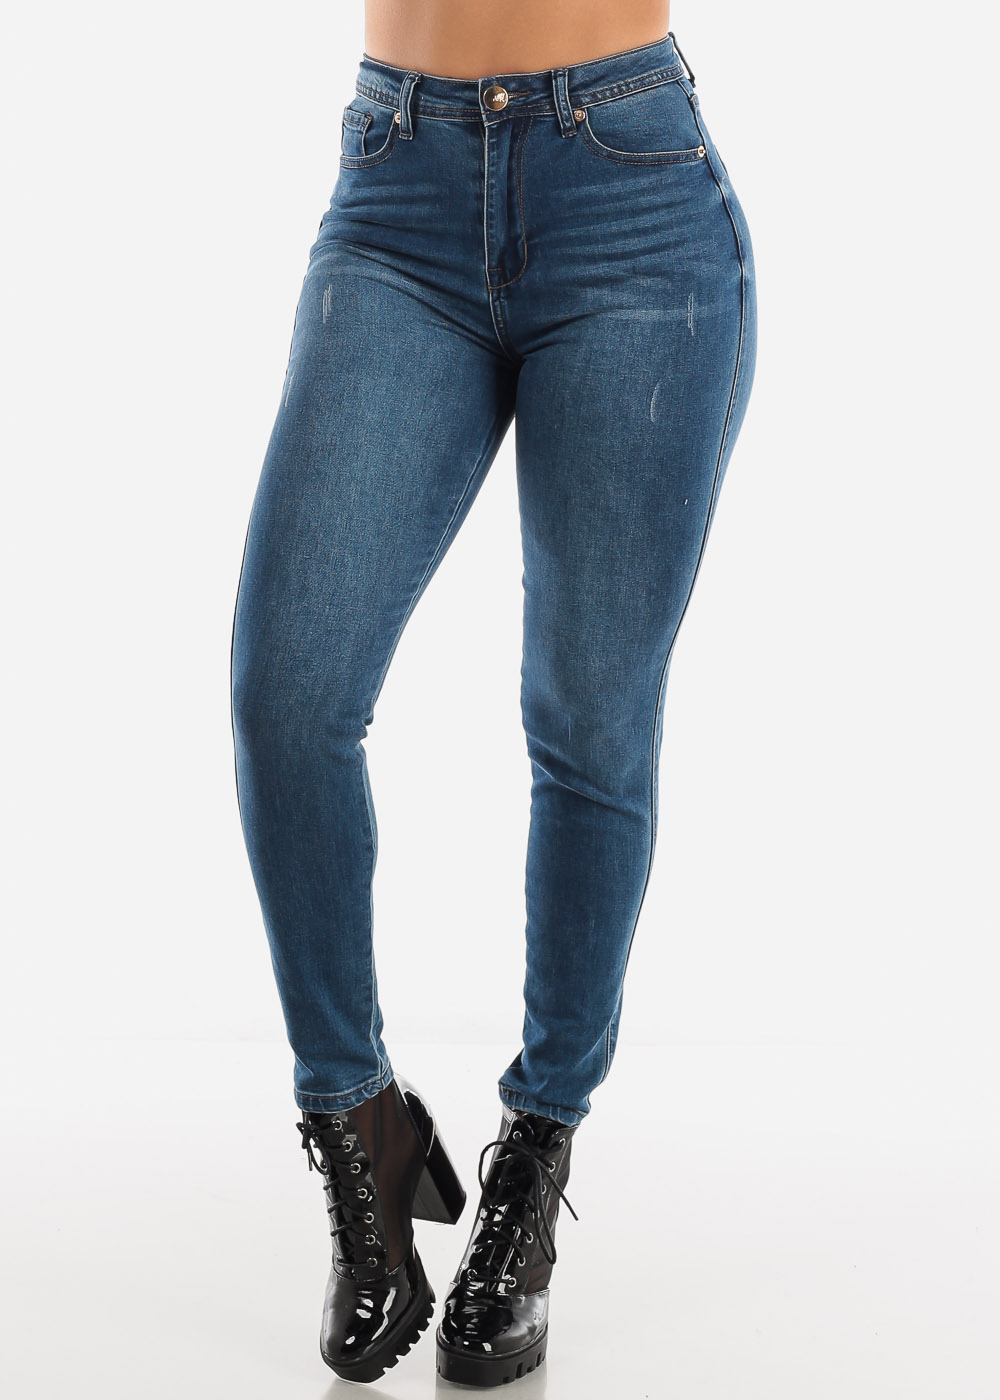 Womens Juniors High Waisted Dark Skinny Jeans - 5 Pocket Denim Jeans - Stretchy Denim Pants 11068O - image 1 of 3